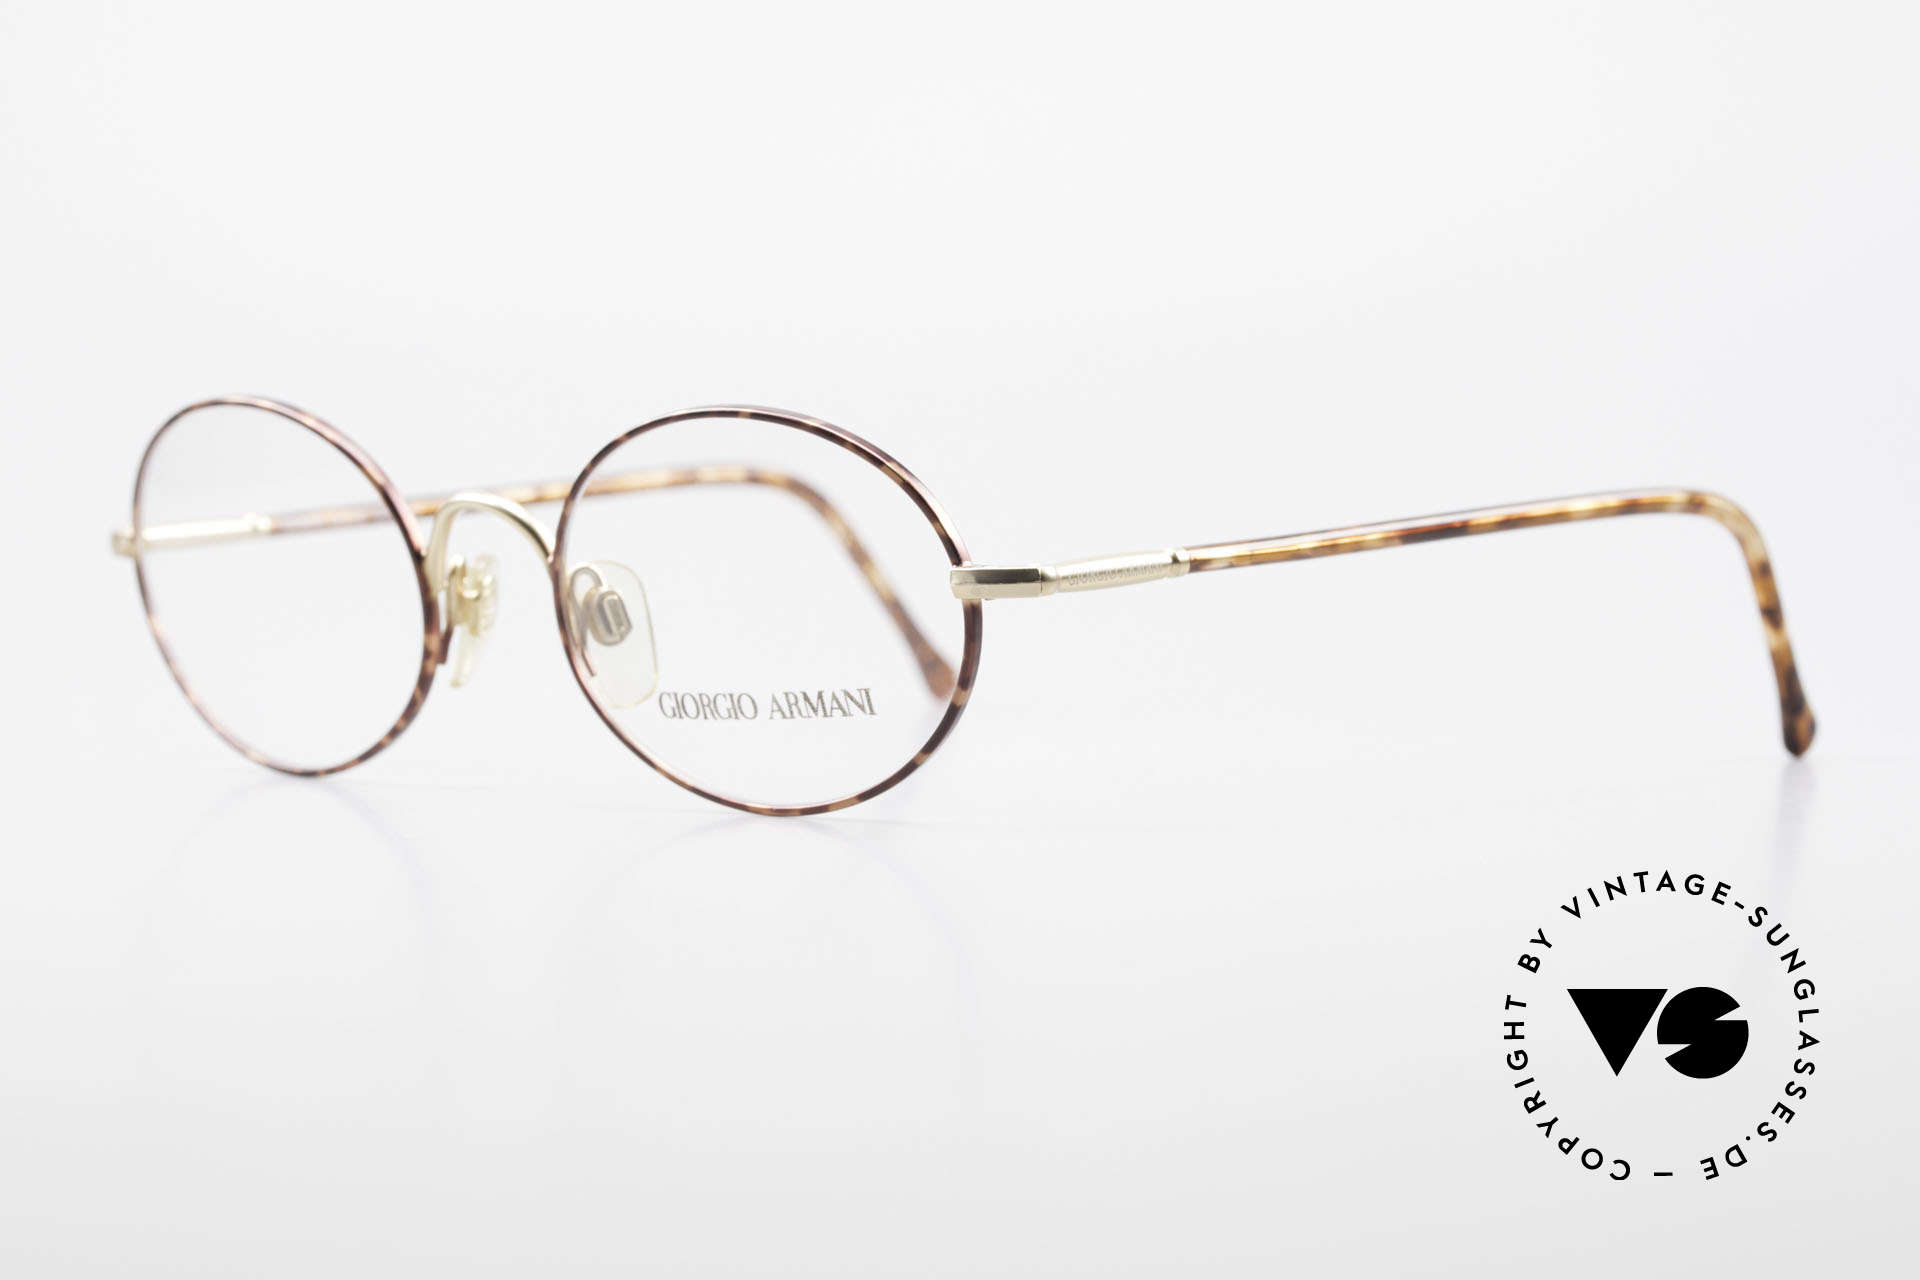 Giorgio Armani 189 Classic Oval Designer Frame, elegant color combination of chestnut brown & gold, Made for Men